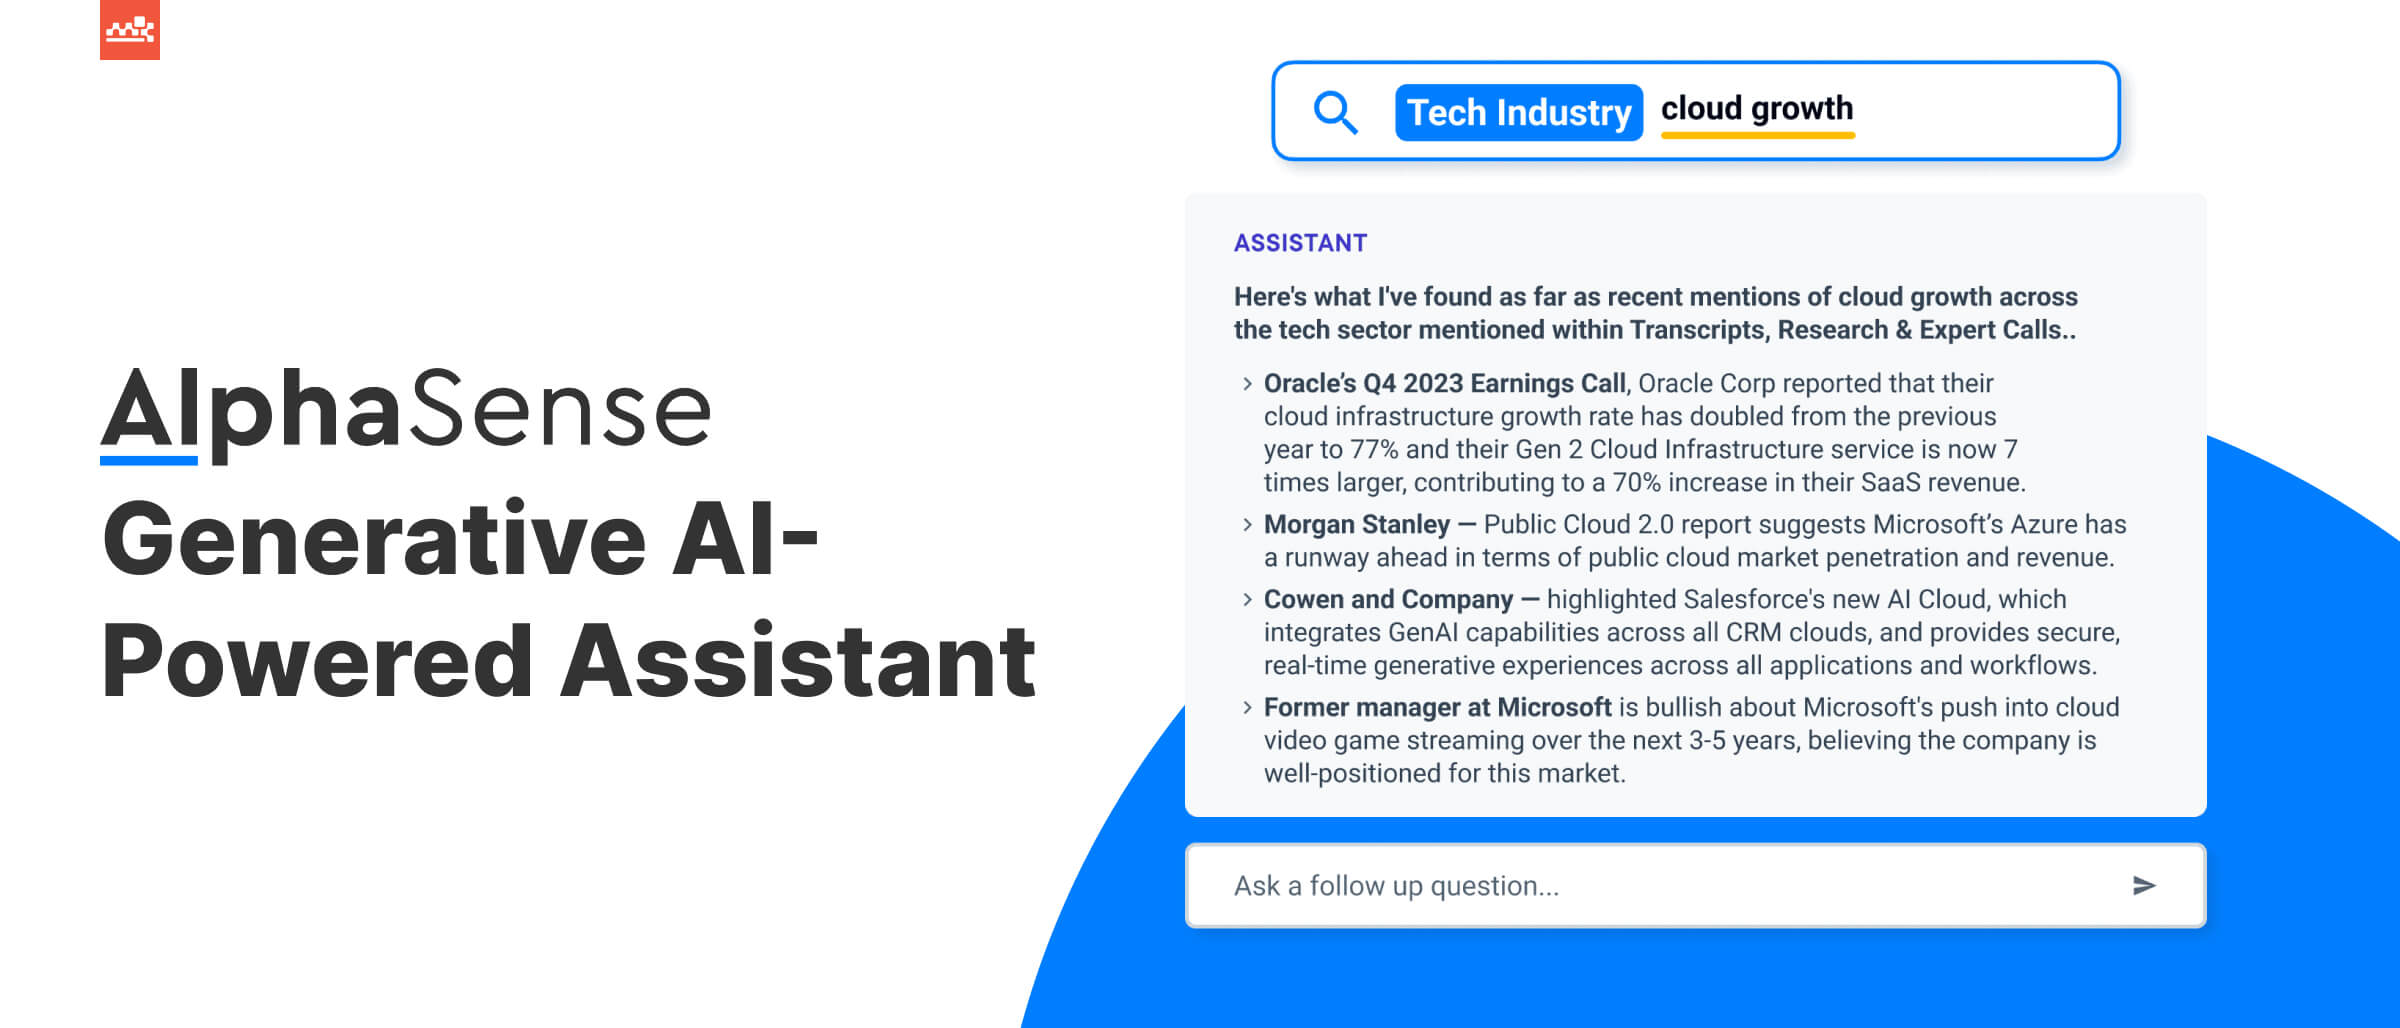 AlphaSense Generative AI-Powered Assistant